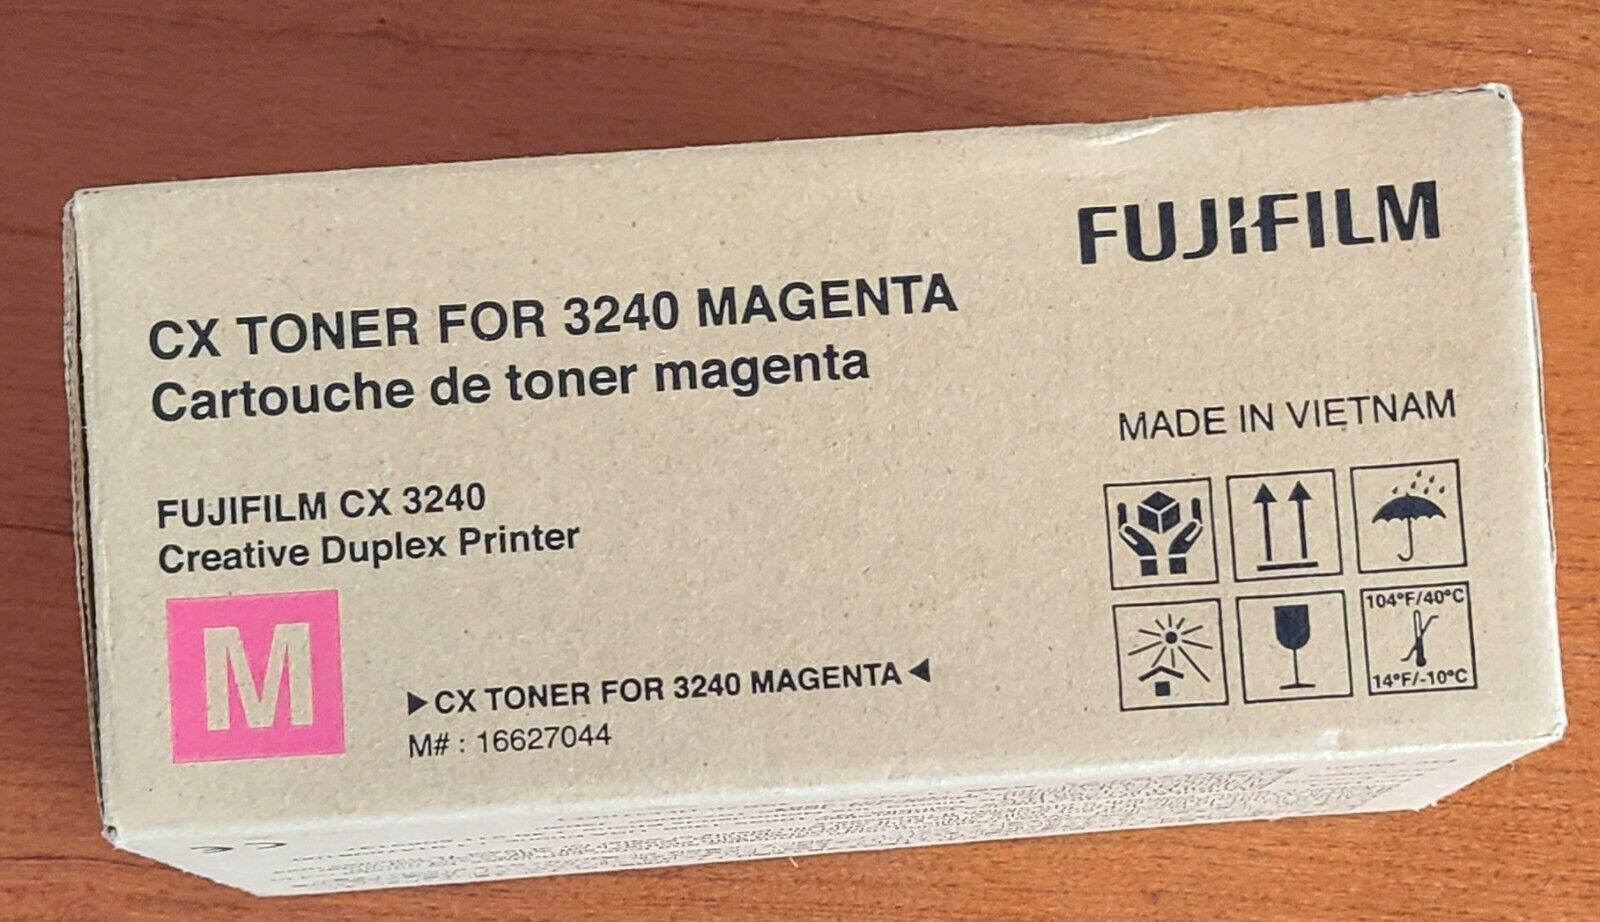 NEW Fujifilm CX Toner For 3240 Magenta Model CT203196 Exp 10/2019